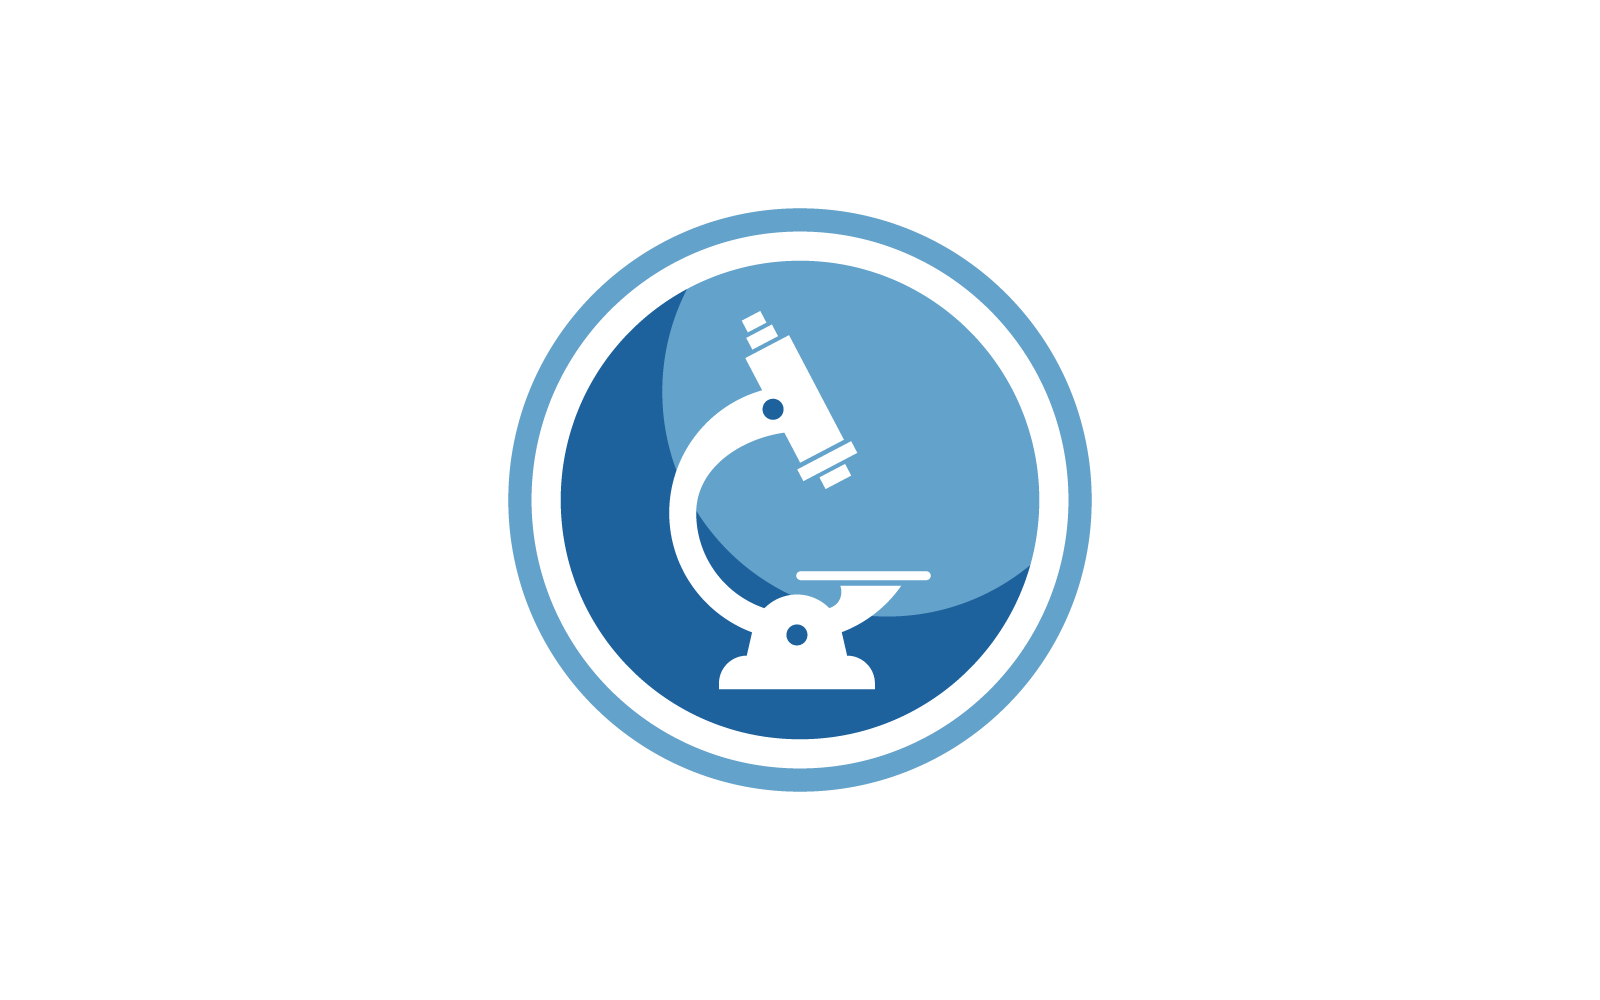 Microscope logo illustration icon vector template